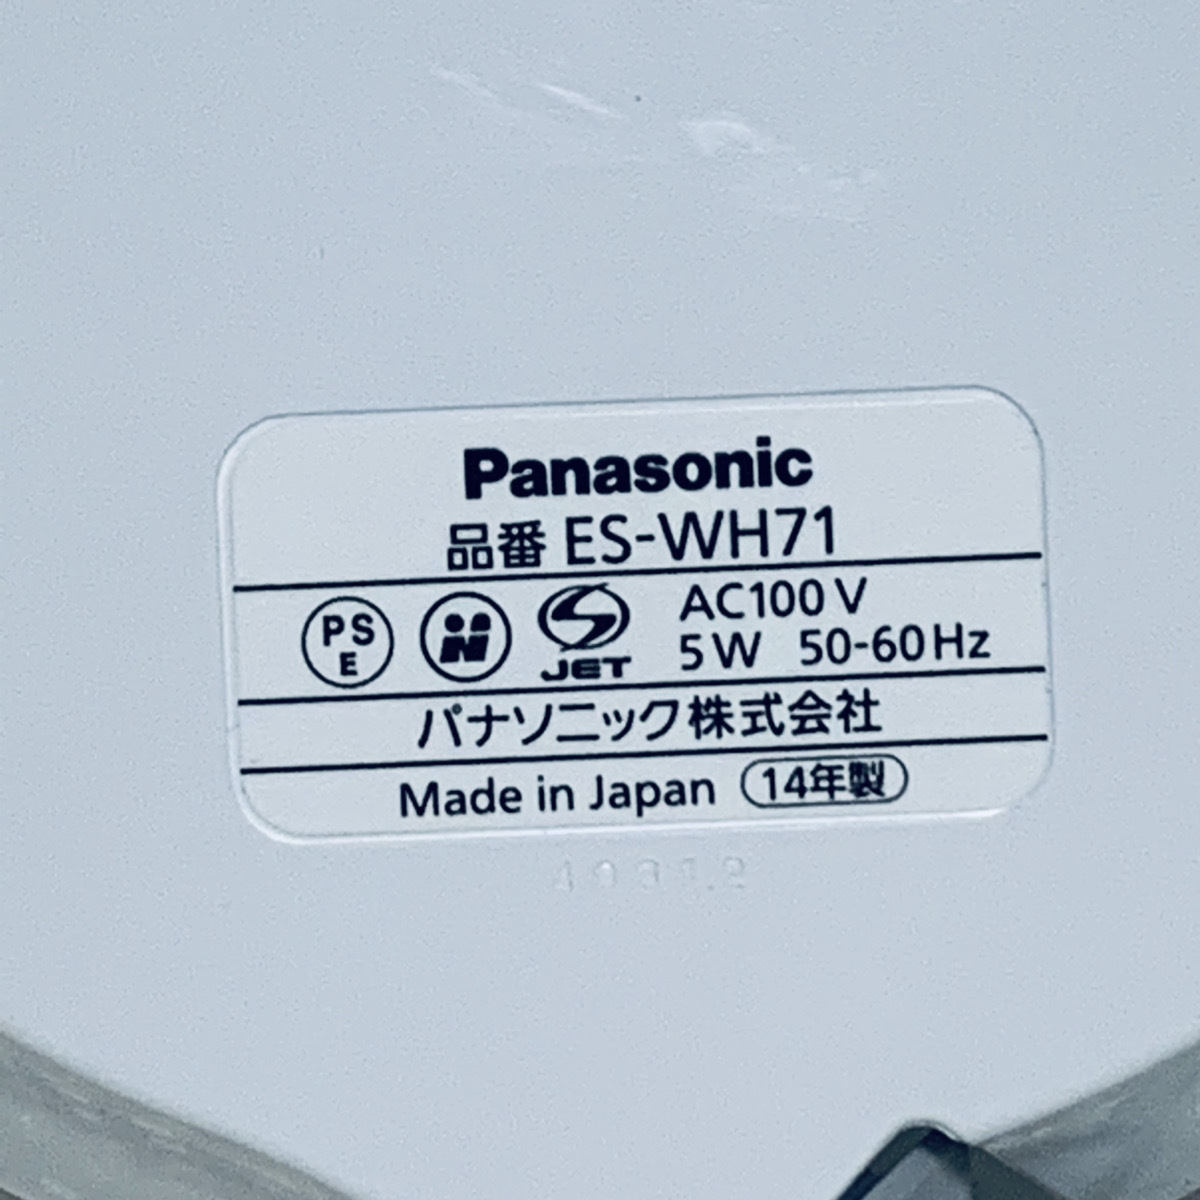 Panasonic パナソニック ES-WH71 光美容器 光エステ ボディ用 ムダ毛処理 除毛 脱毛 美容家電_画像5